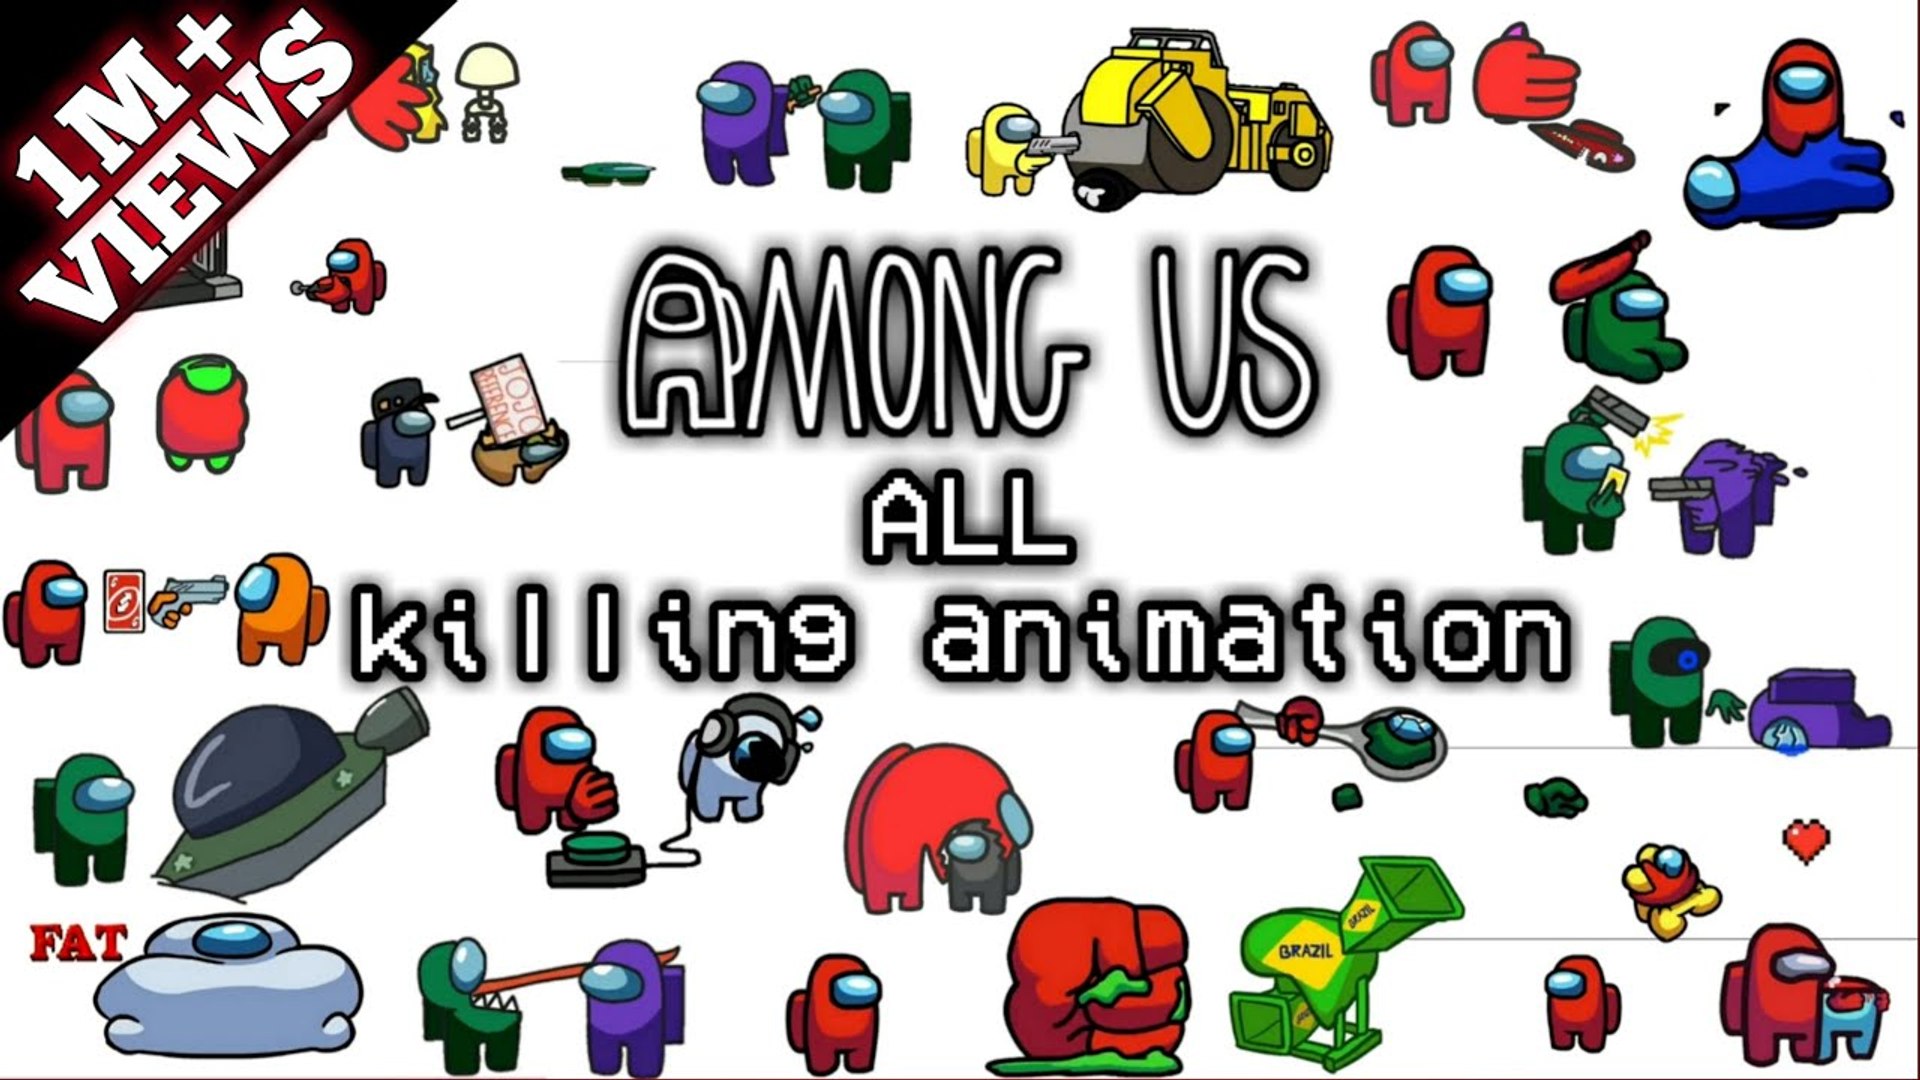 Among us all killing animation meme compilation. - video Dailymotion